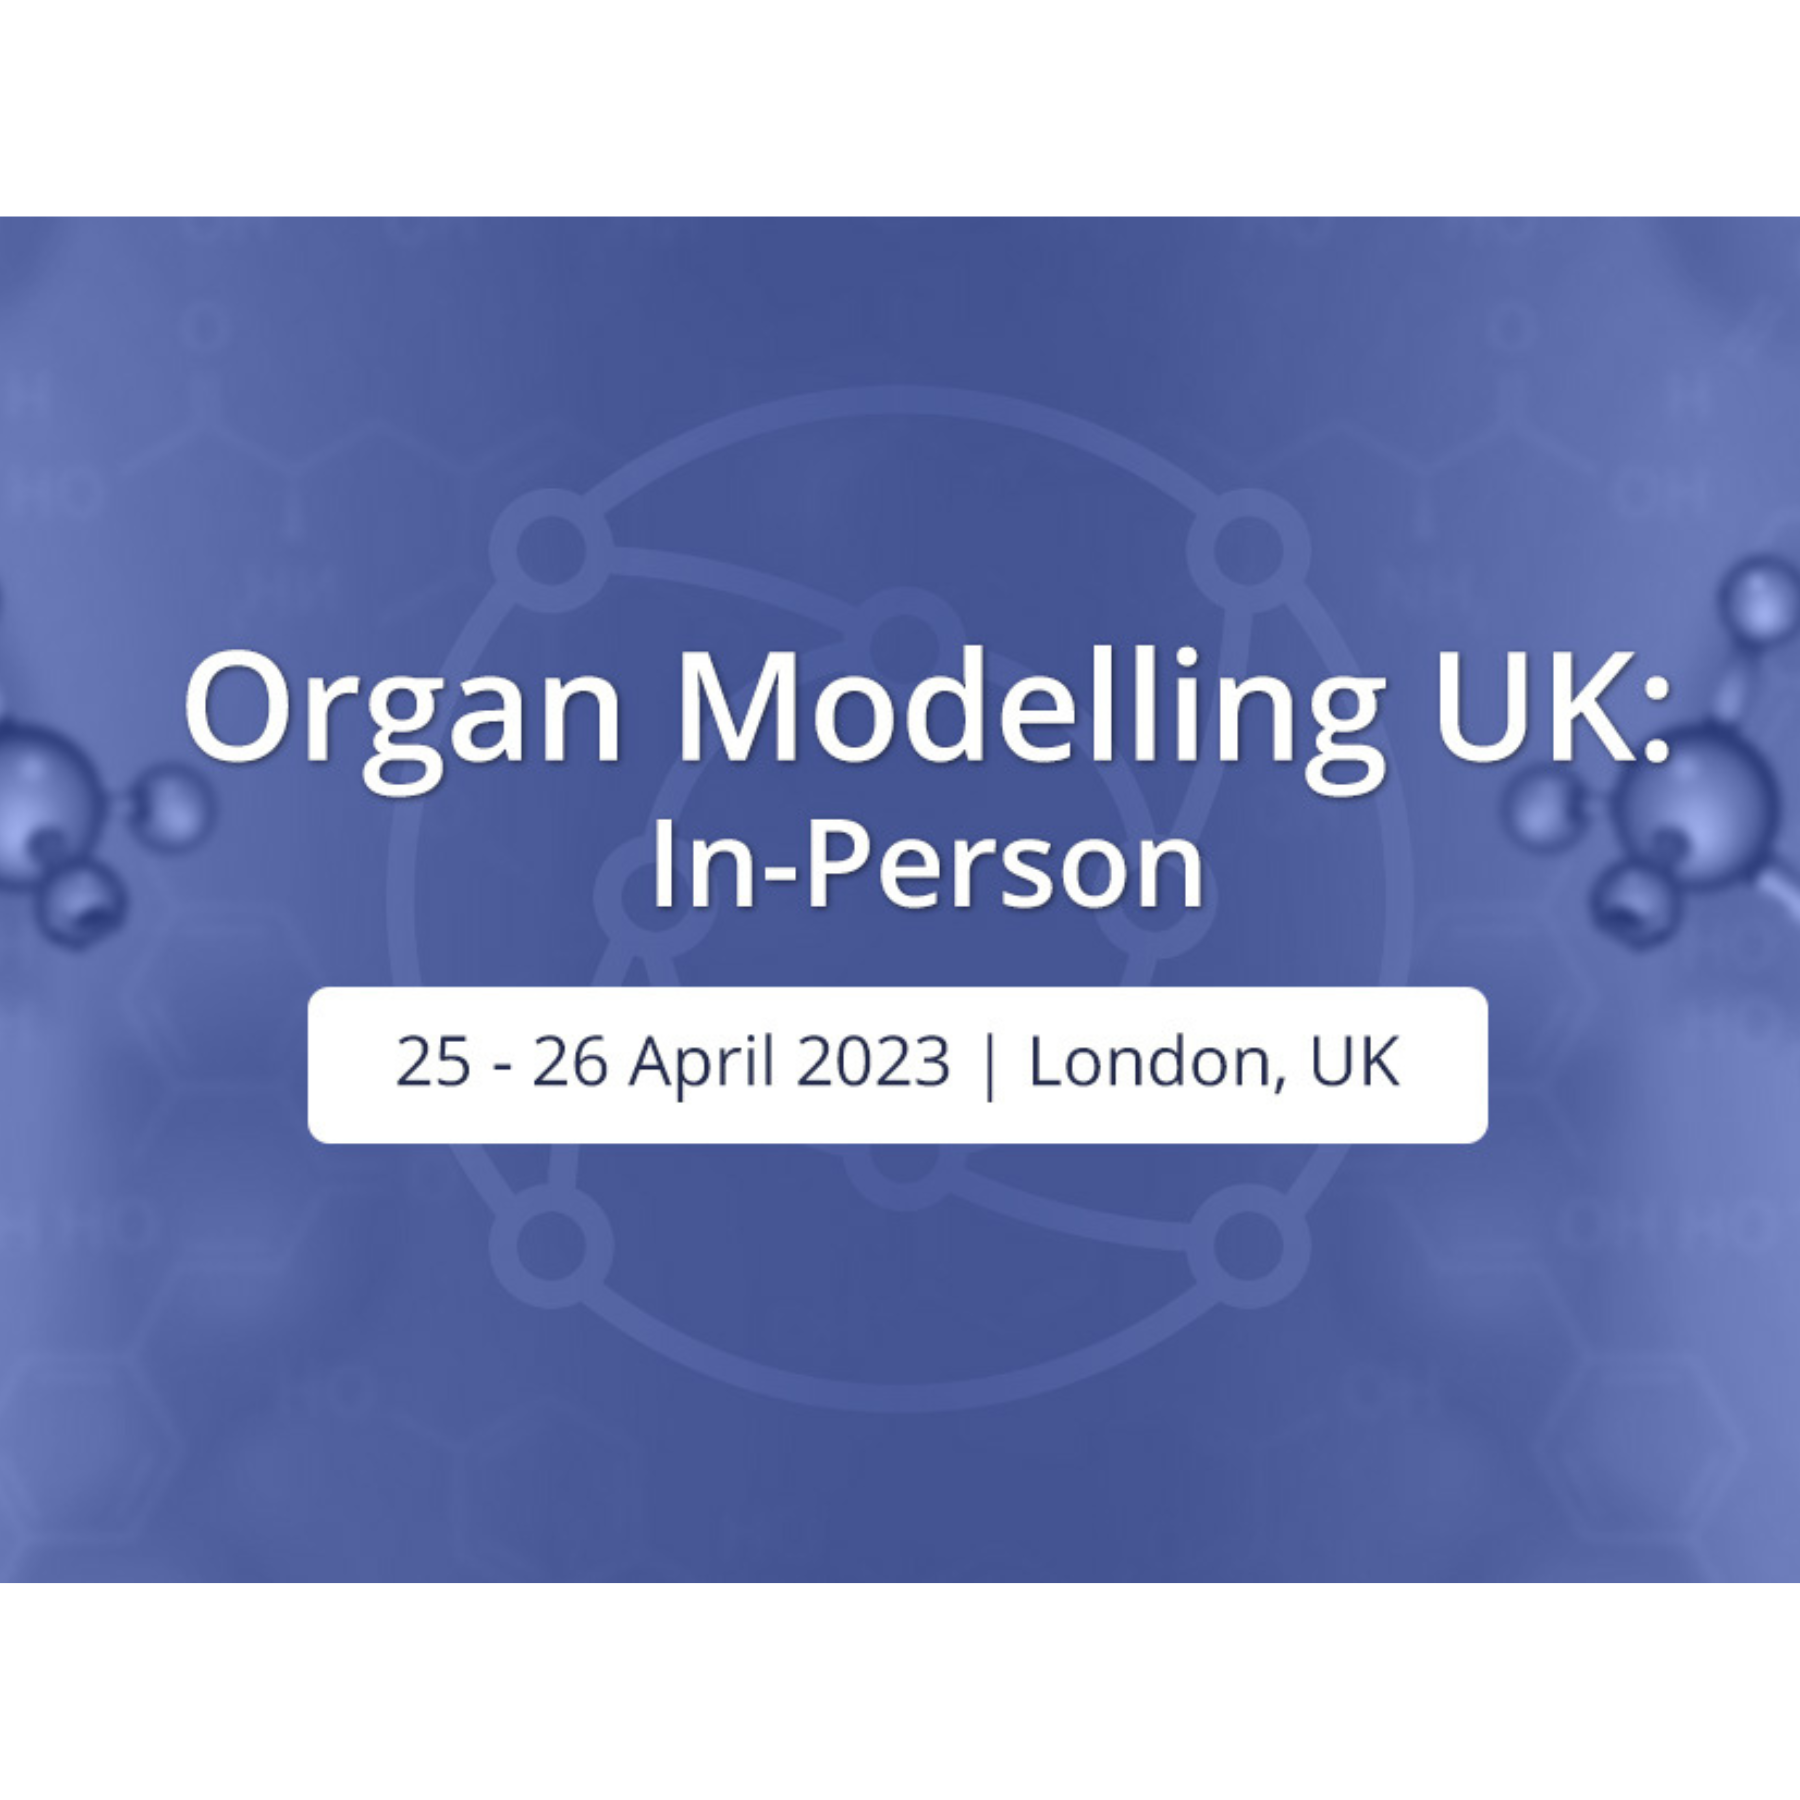 Organ Modelling